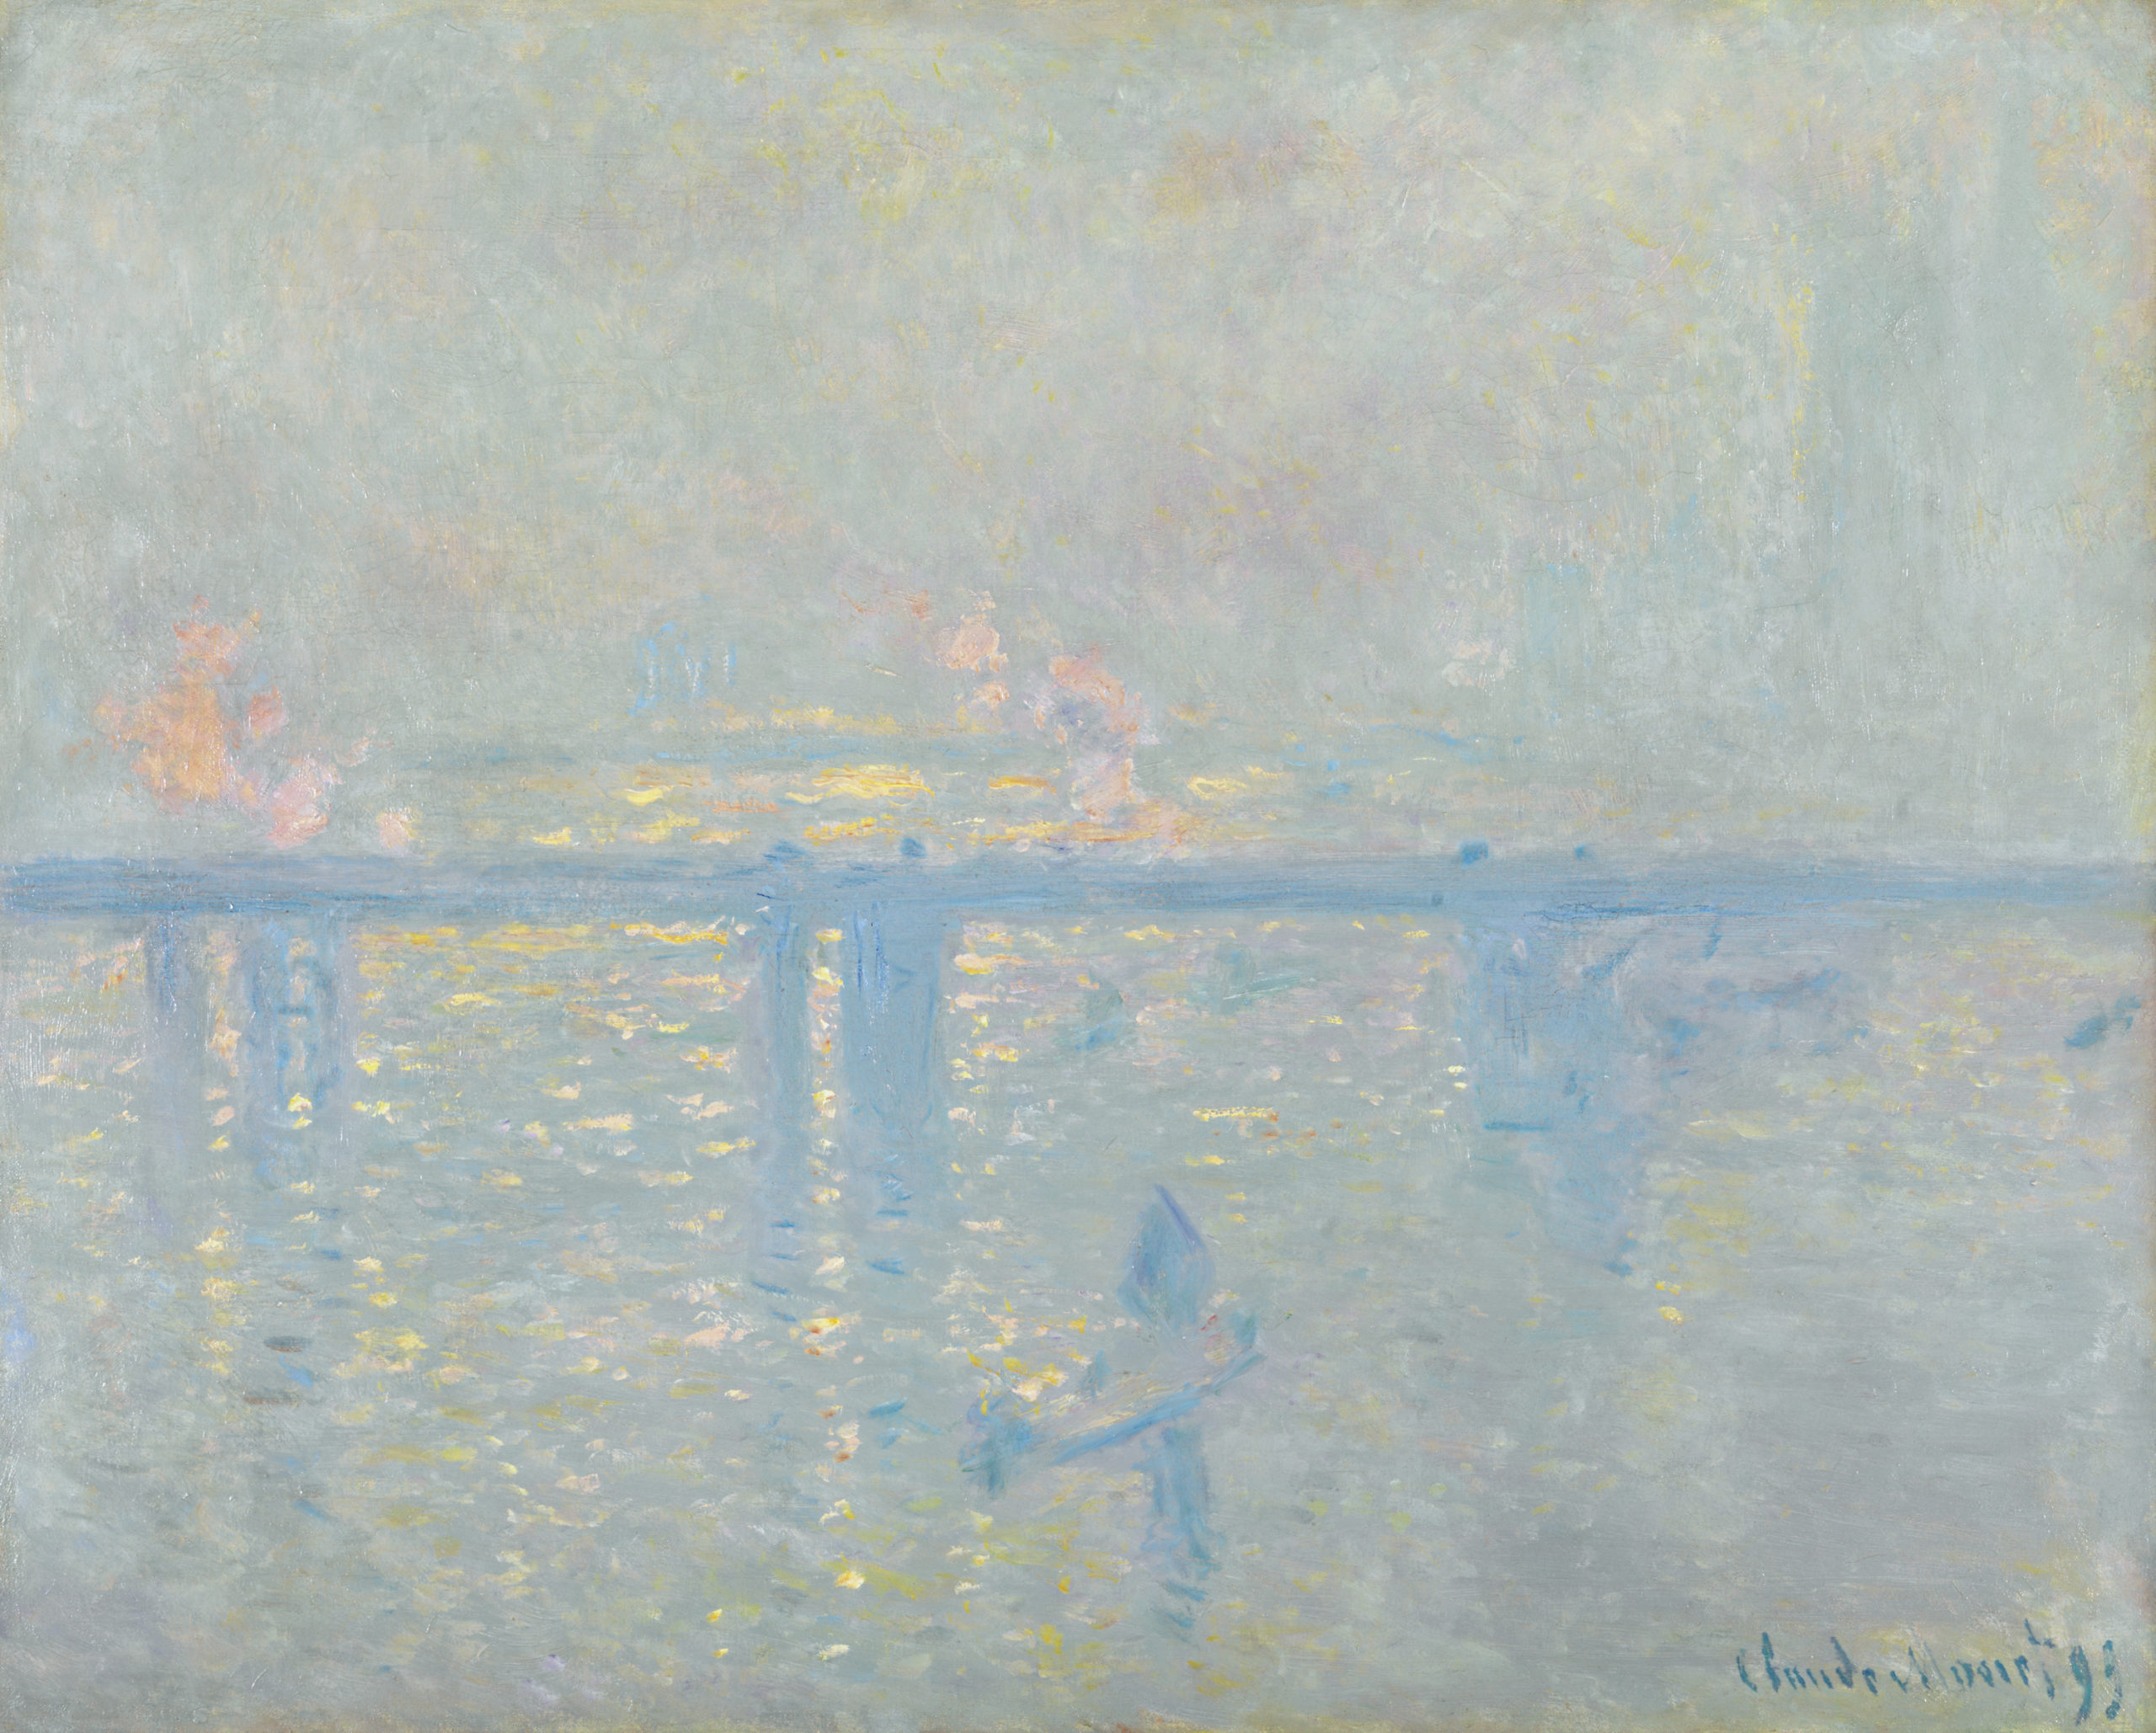 Claude Monet, Charing Cross Bridge, 1899, oil on canvas, 64.8 x 80.6 cm (Thyssen-Bornemisza Museum, Madrid)